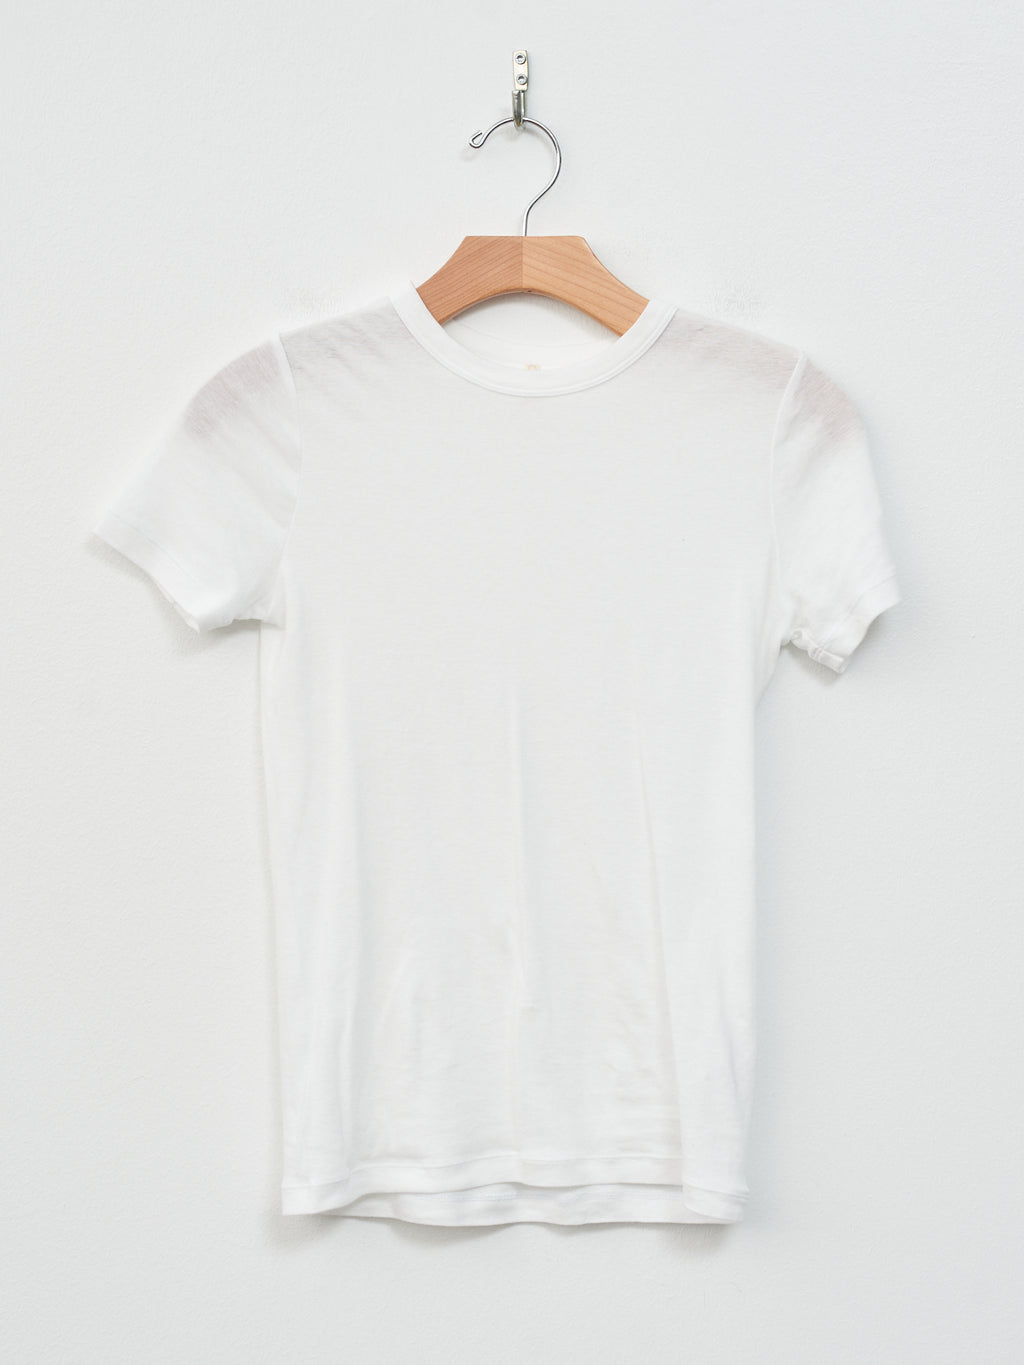 Namu Shop - Babaco Cotton/Silk Basic T-Shirt - White